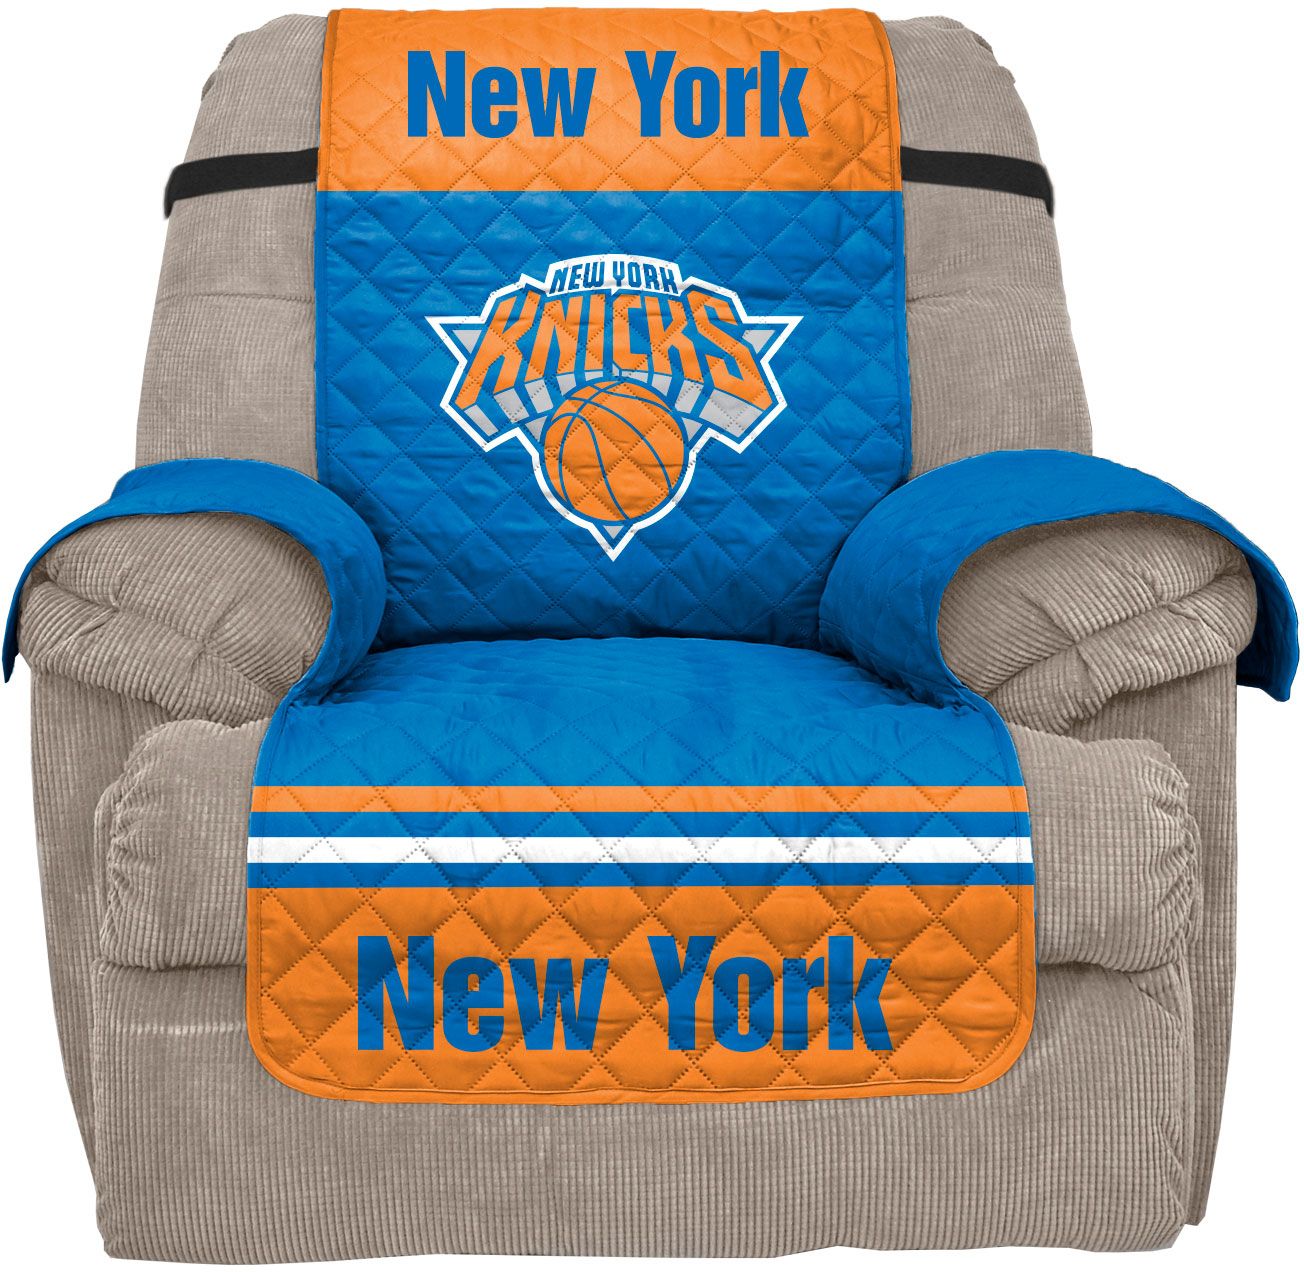 Pegasus Sports New York Knicks Recliner Protector